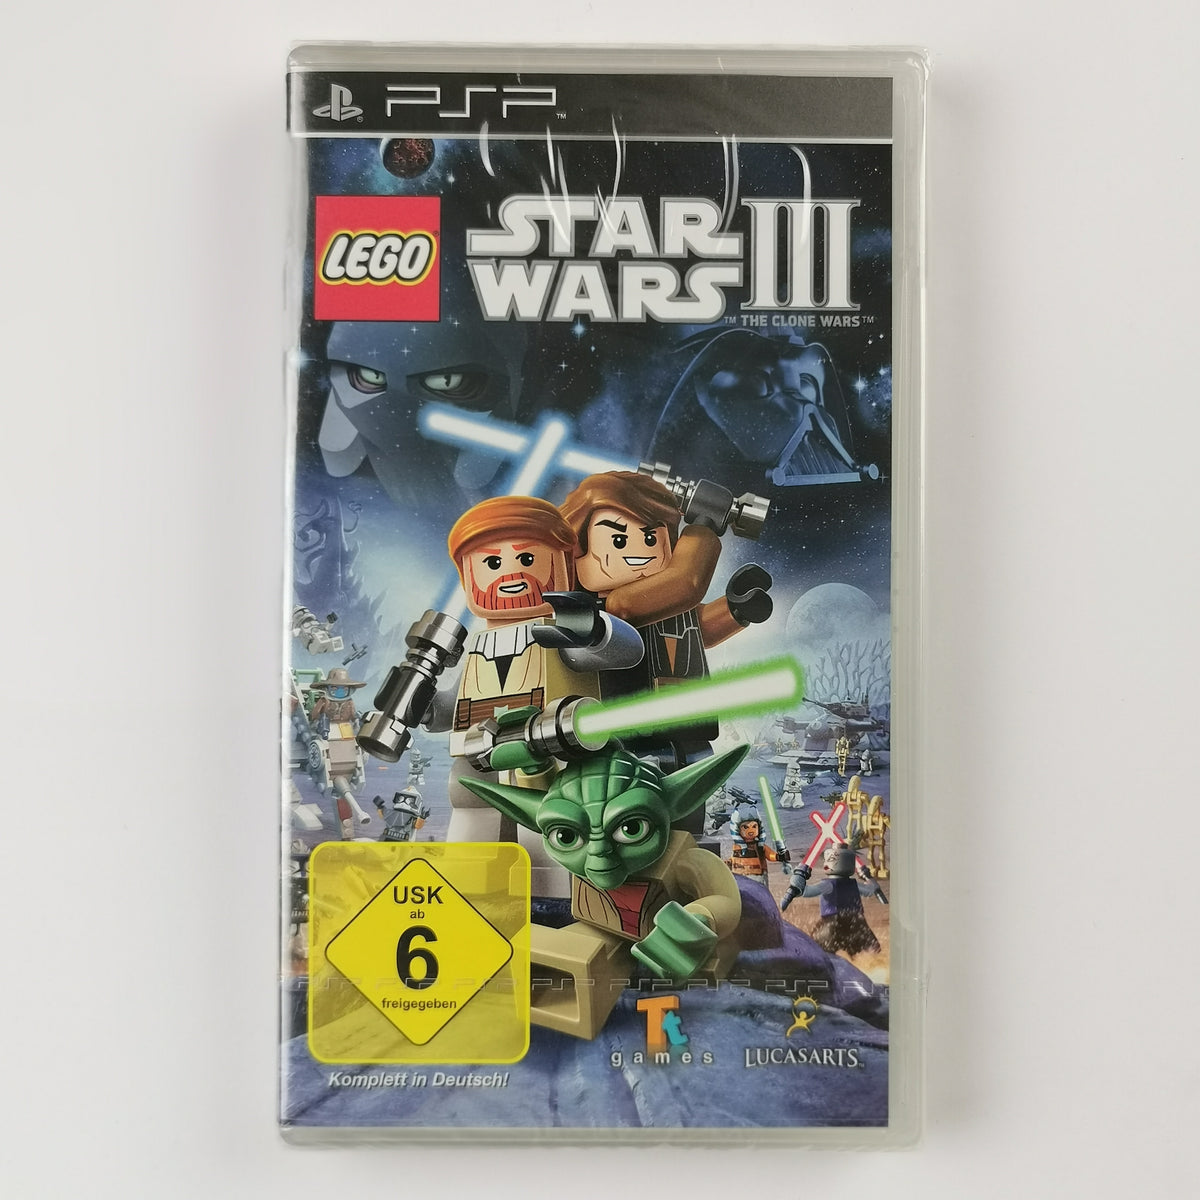 Lego Star Wars III The Clone Wars [PSP]